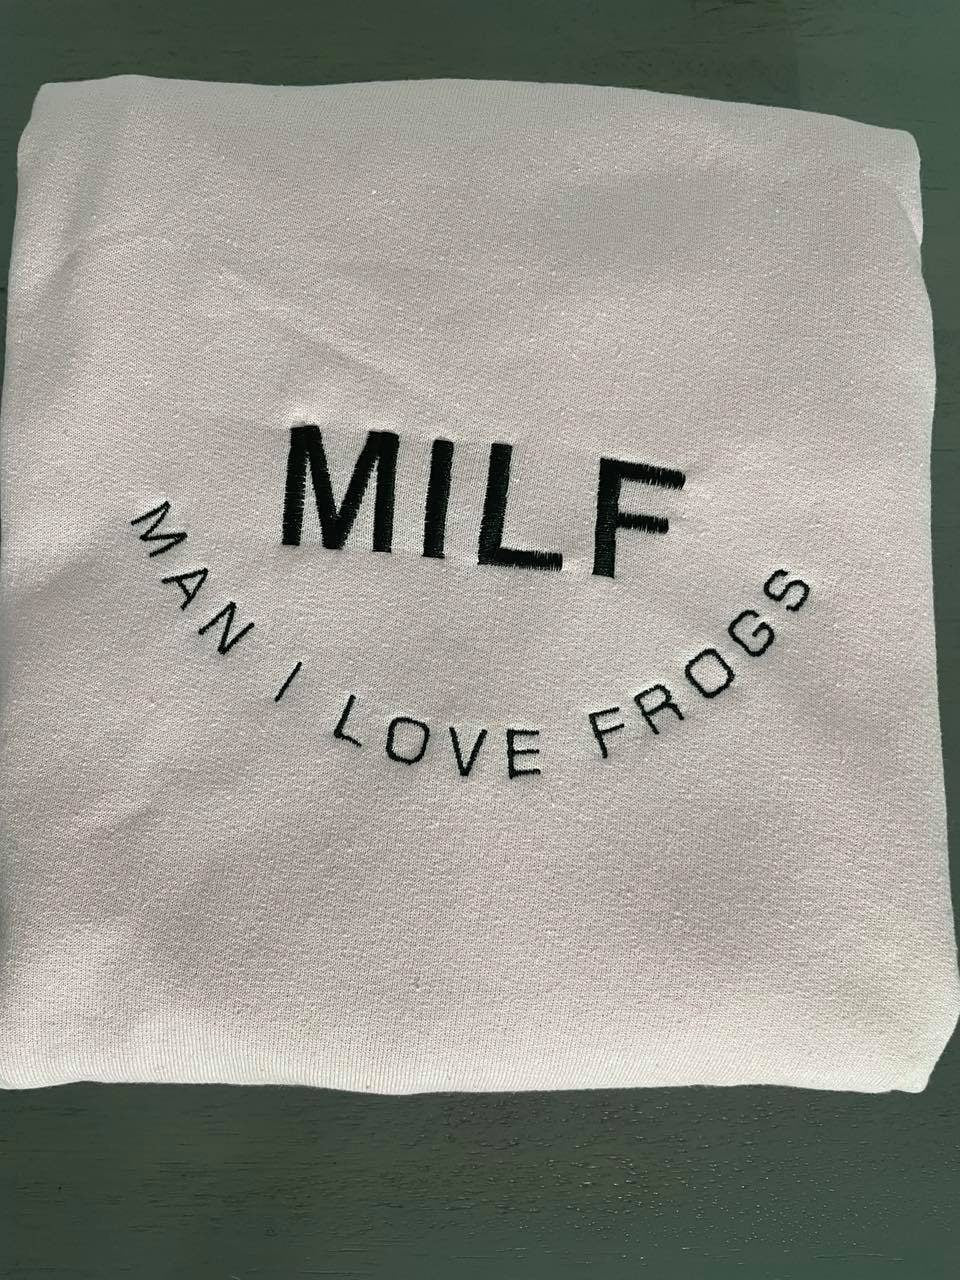 MILF Man I love Frogs embroidered sweatshirt, MILF Embroidery sweatshirts; custom Frogs sweatshirts, funny sweatshirt; funny mother's gift - MrEmbroideryGifts